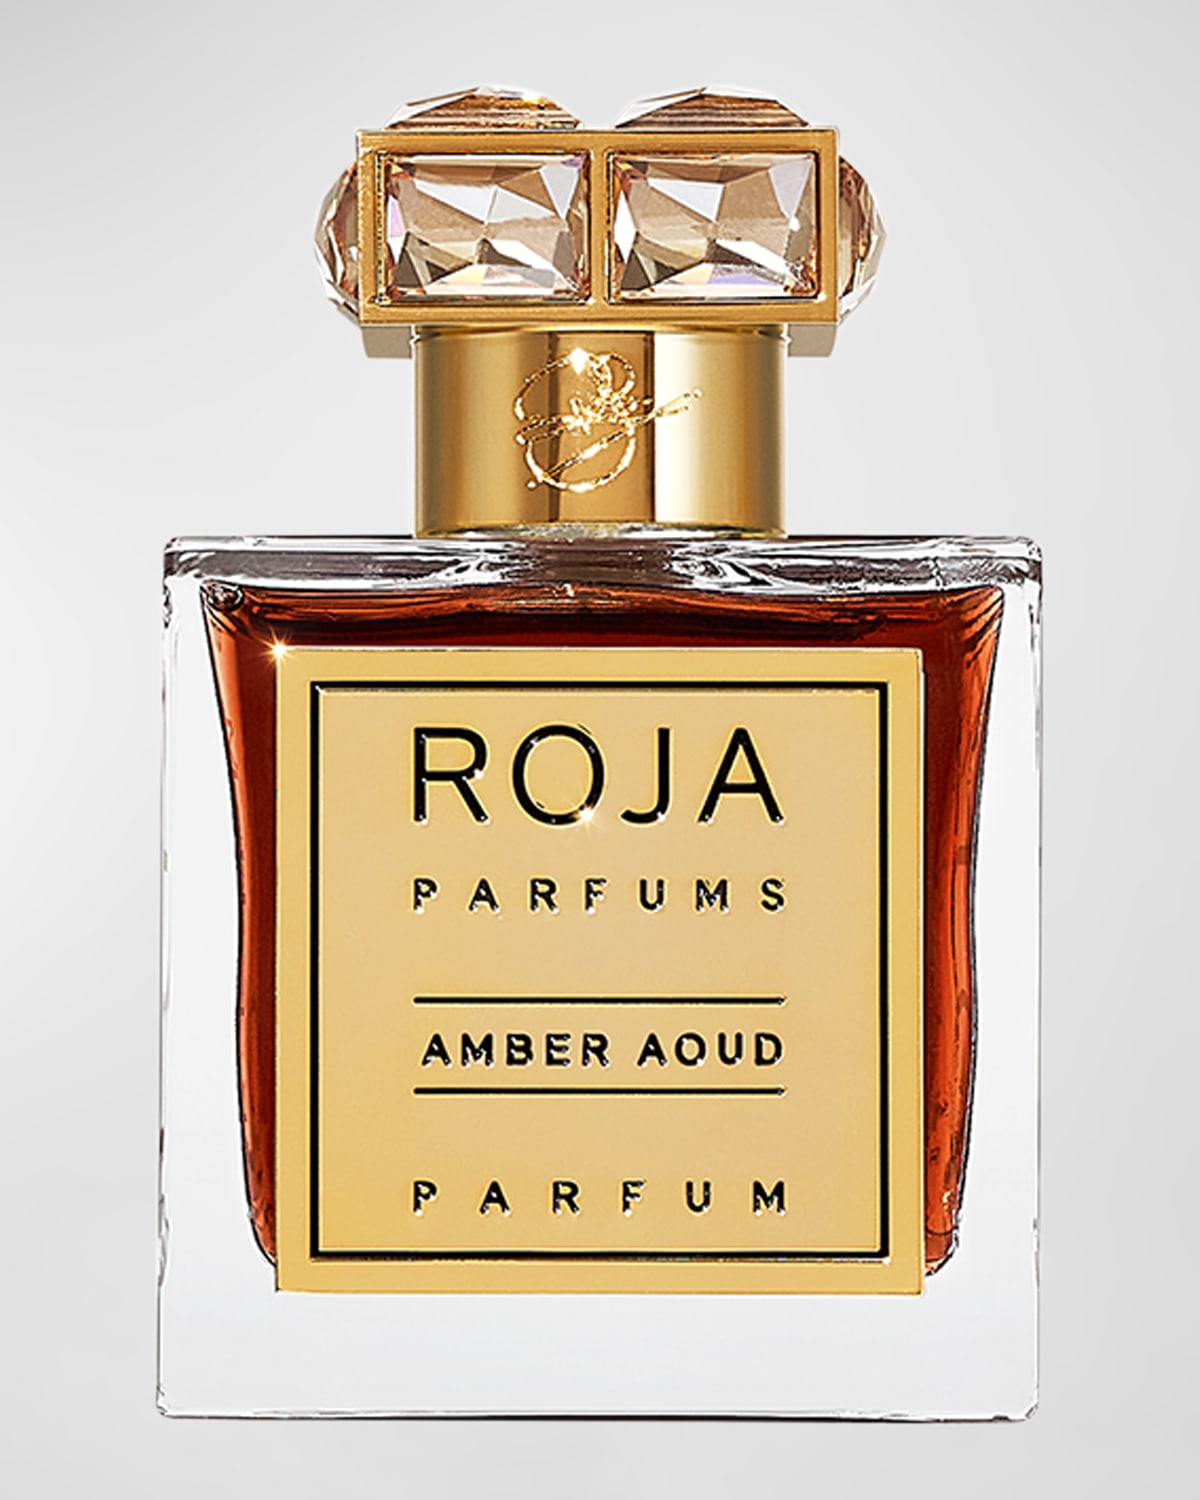 Amber Aoud Parfum, 3.4 oz.